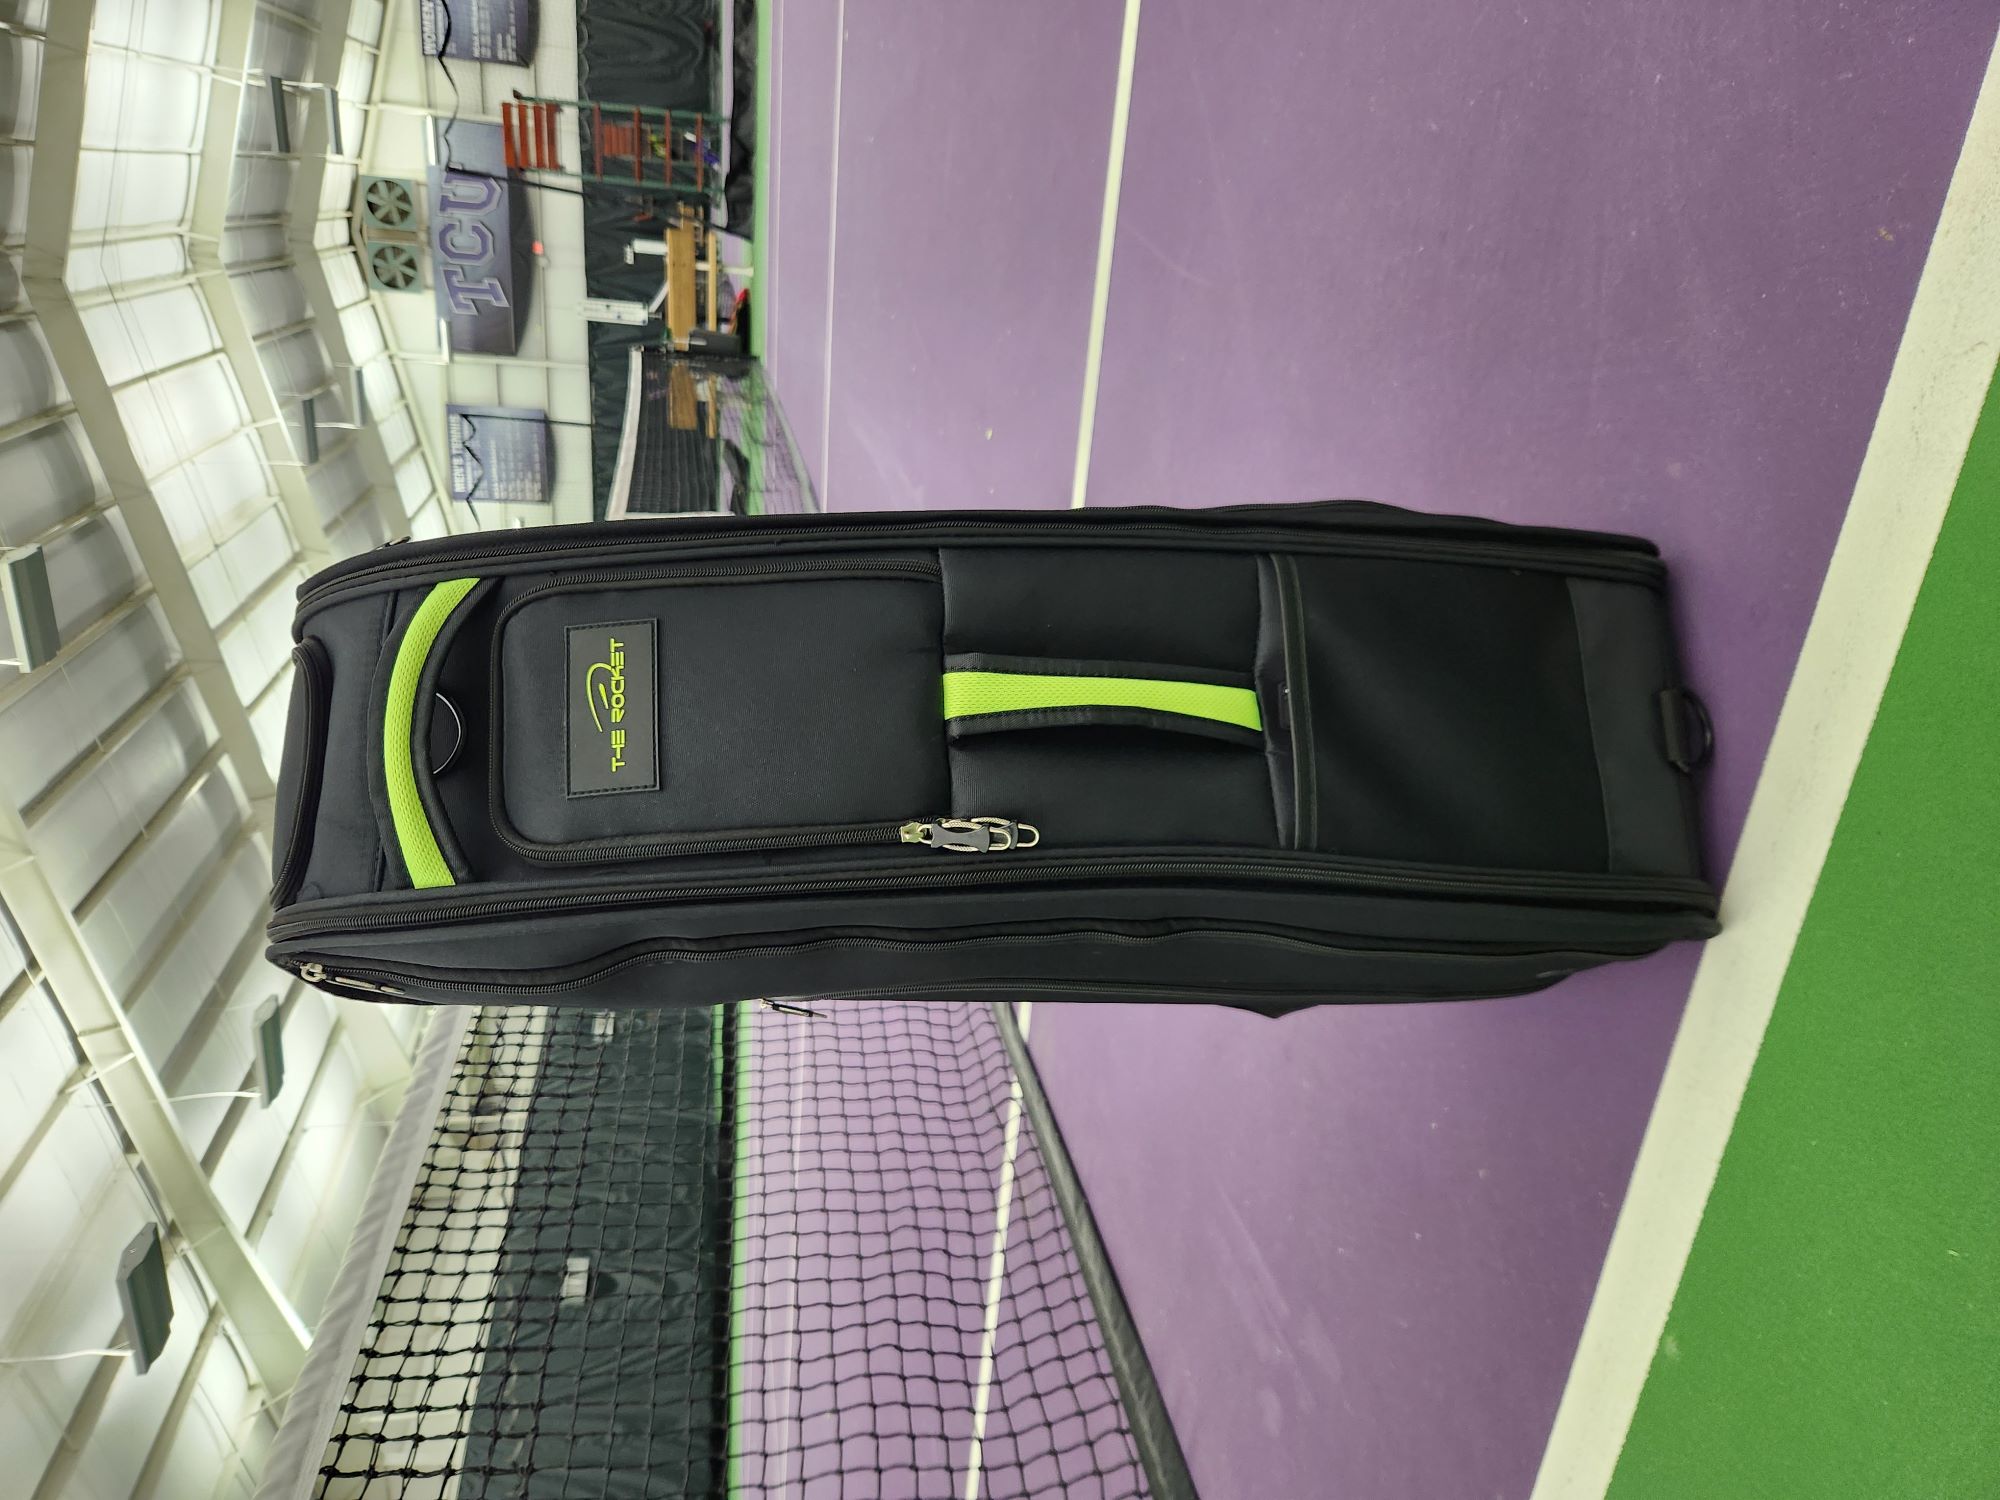 Rocket tennis bag on the court